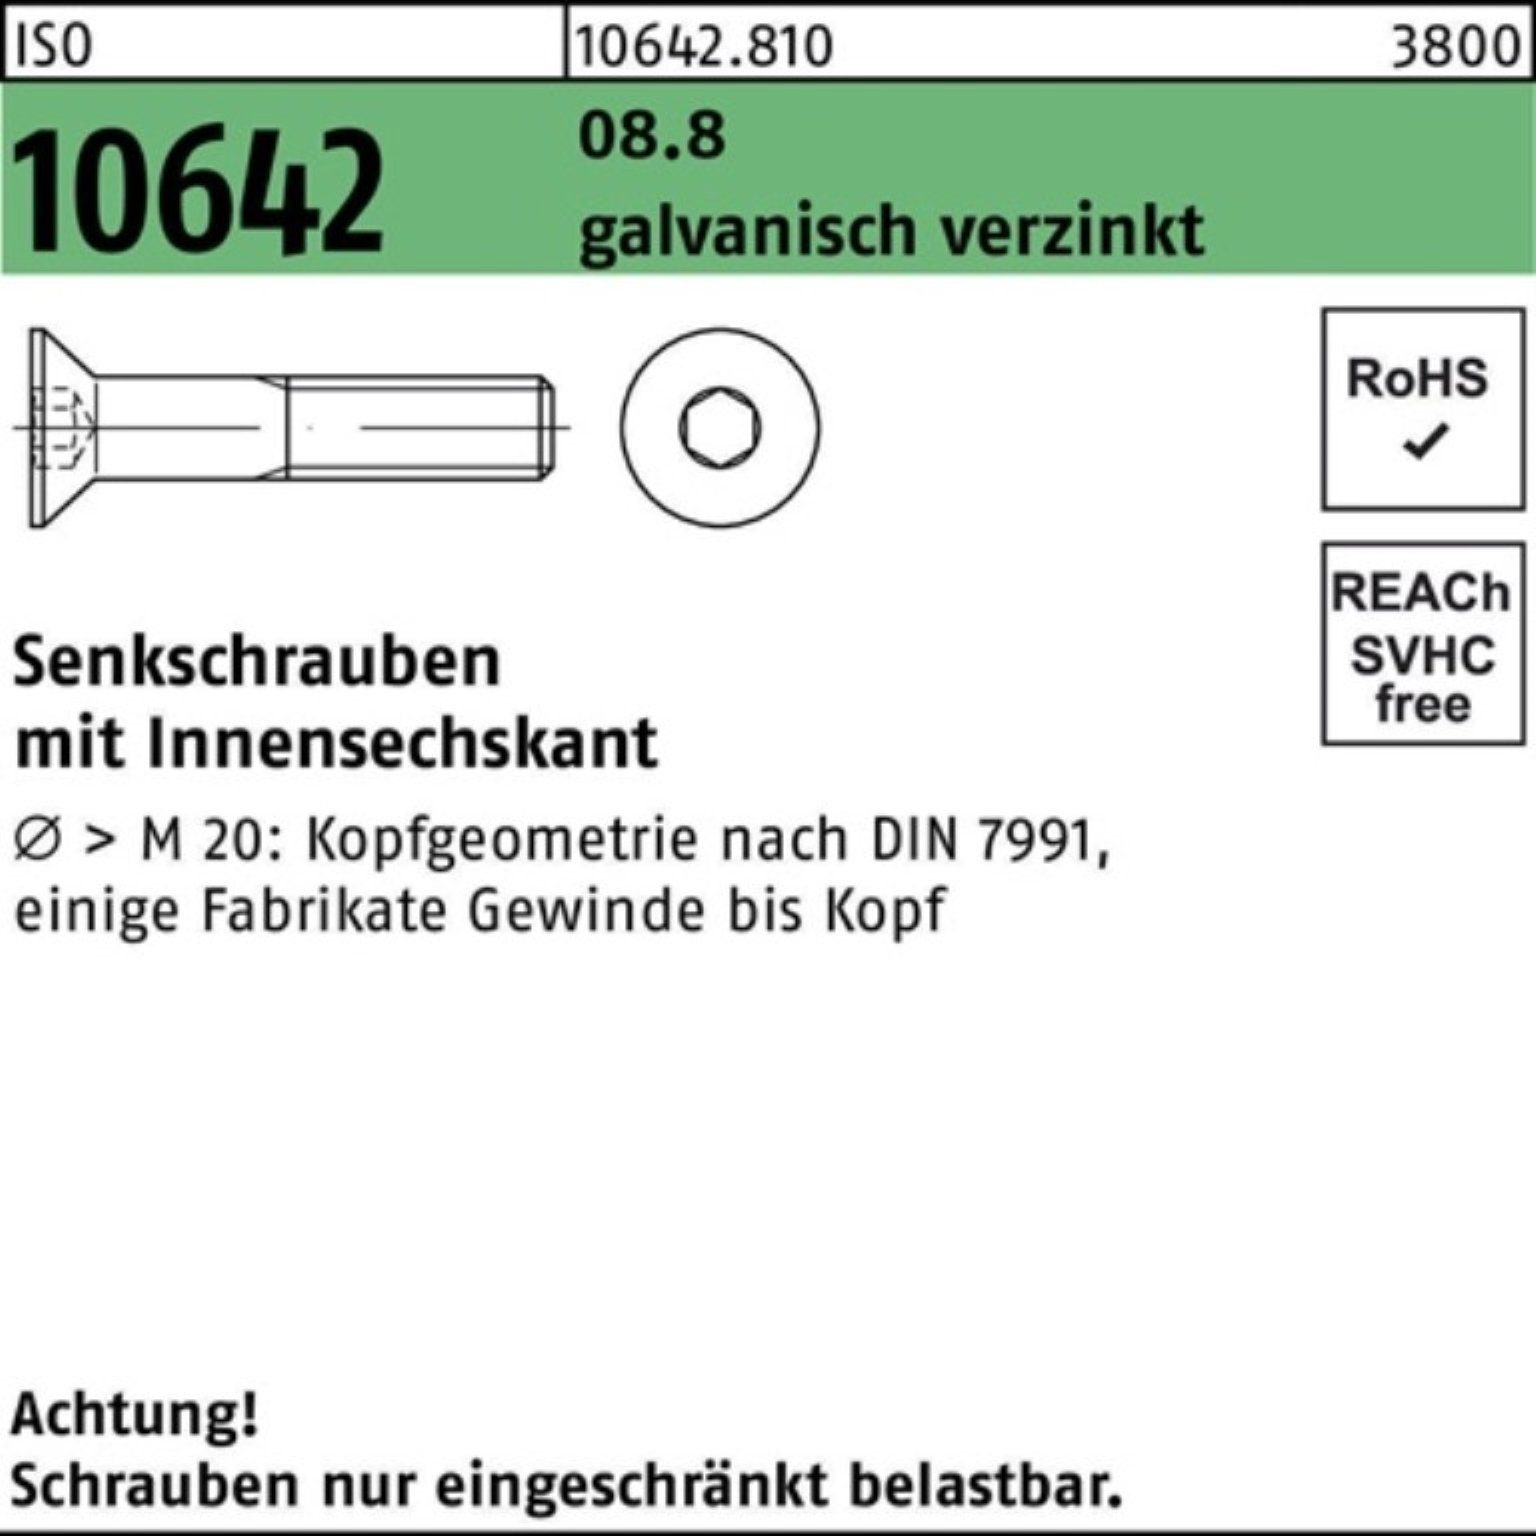 70 Pack M10x 8.8 galv.verz. 100 Senkschraube Senkschraube Reyher 10642 Innen-6kt ISO 100er